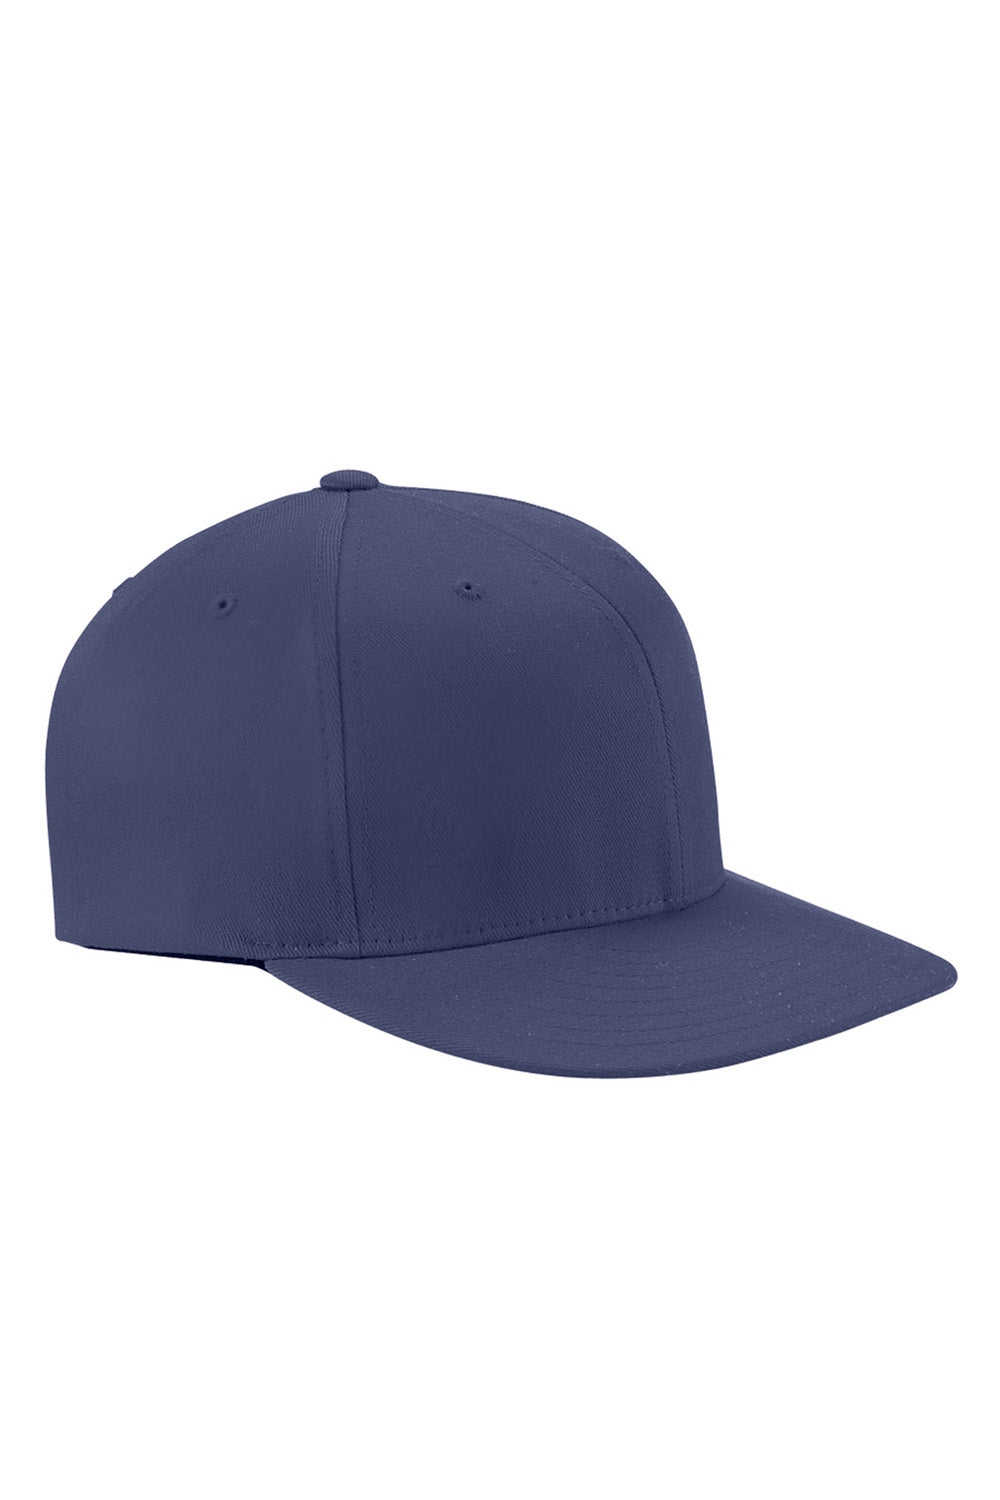 Flexfit 6297F Mens Stretch Fit Hat Navy Blue Front